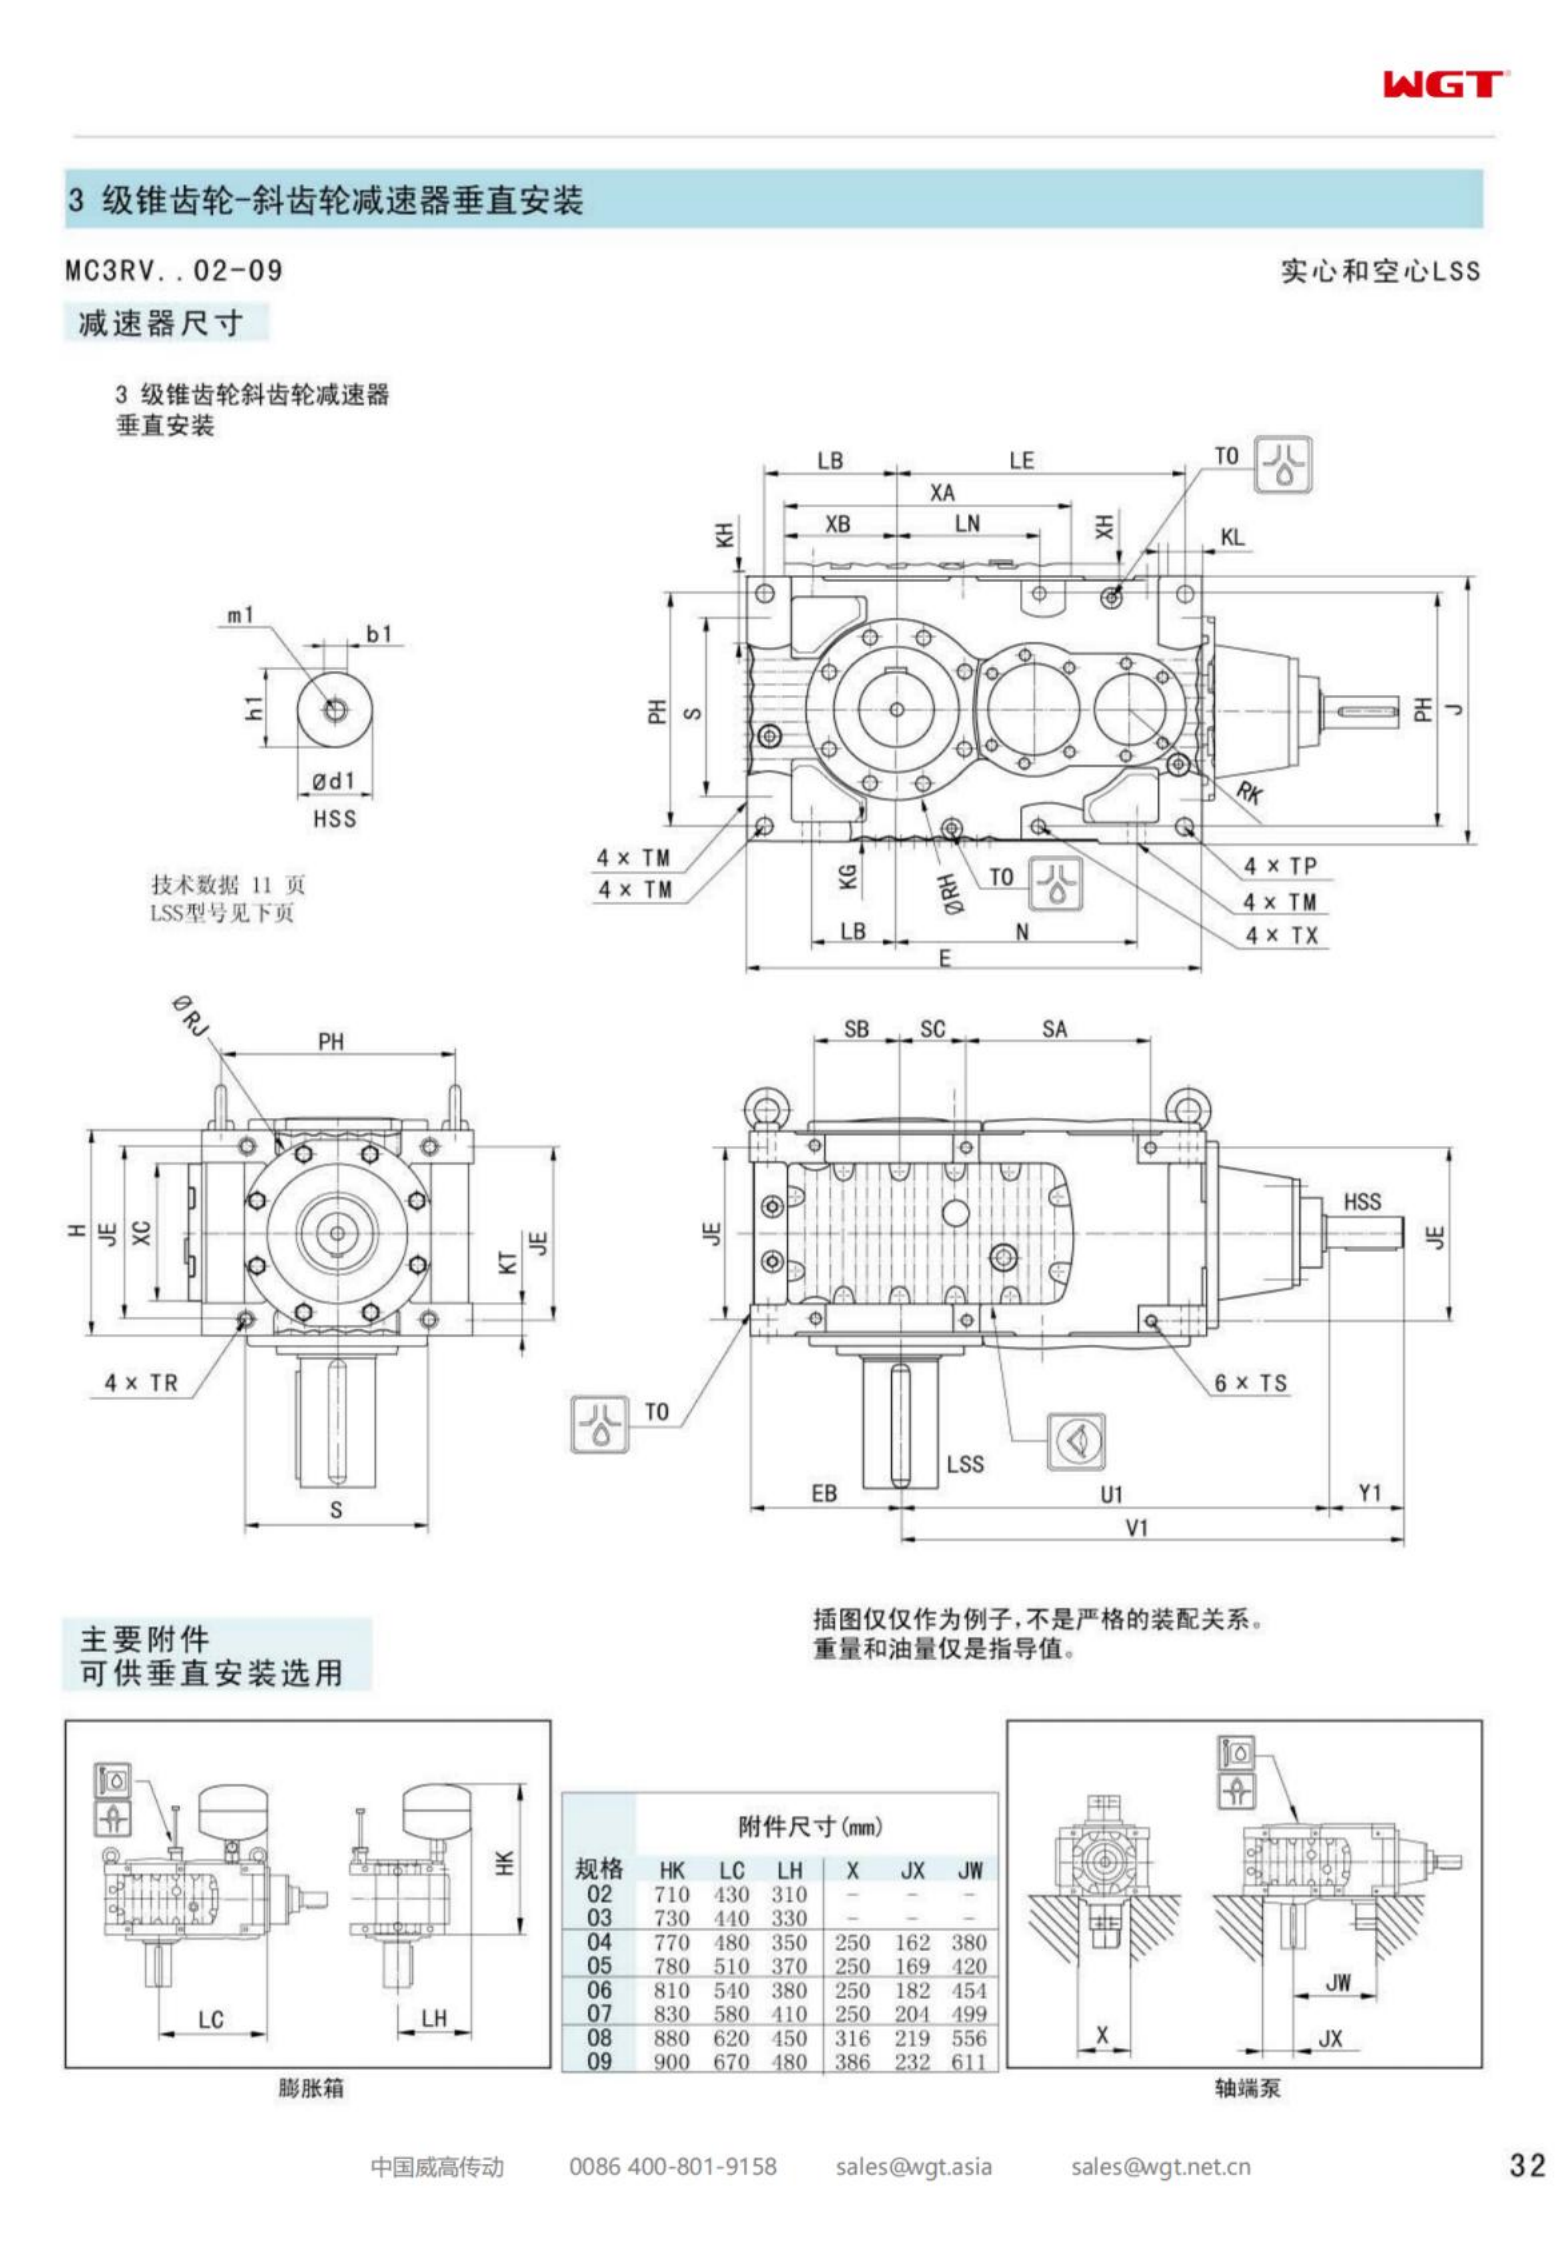 MC3RVST05 replaces _SEW_MC_Series gearbox (patent)